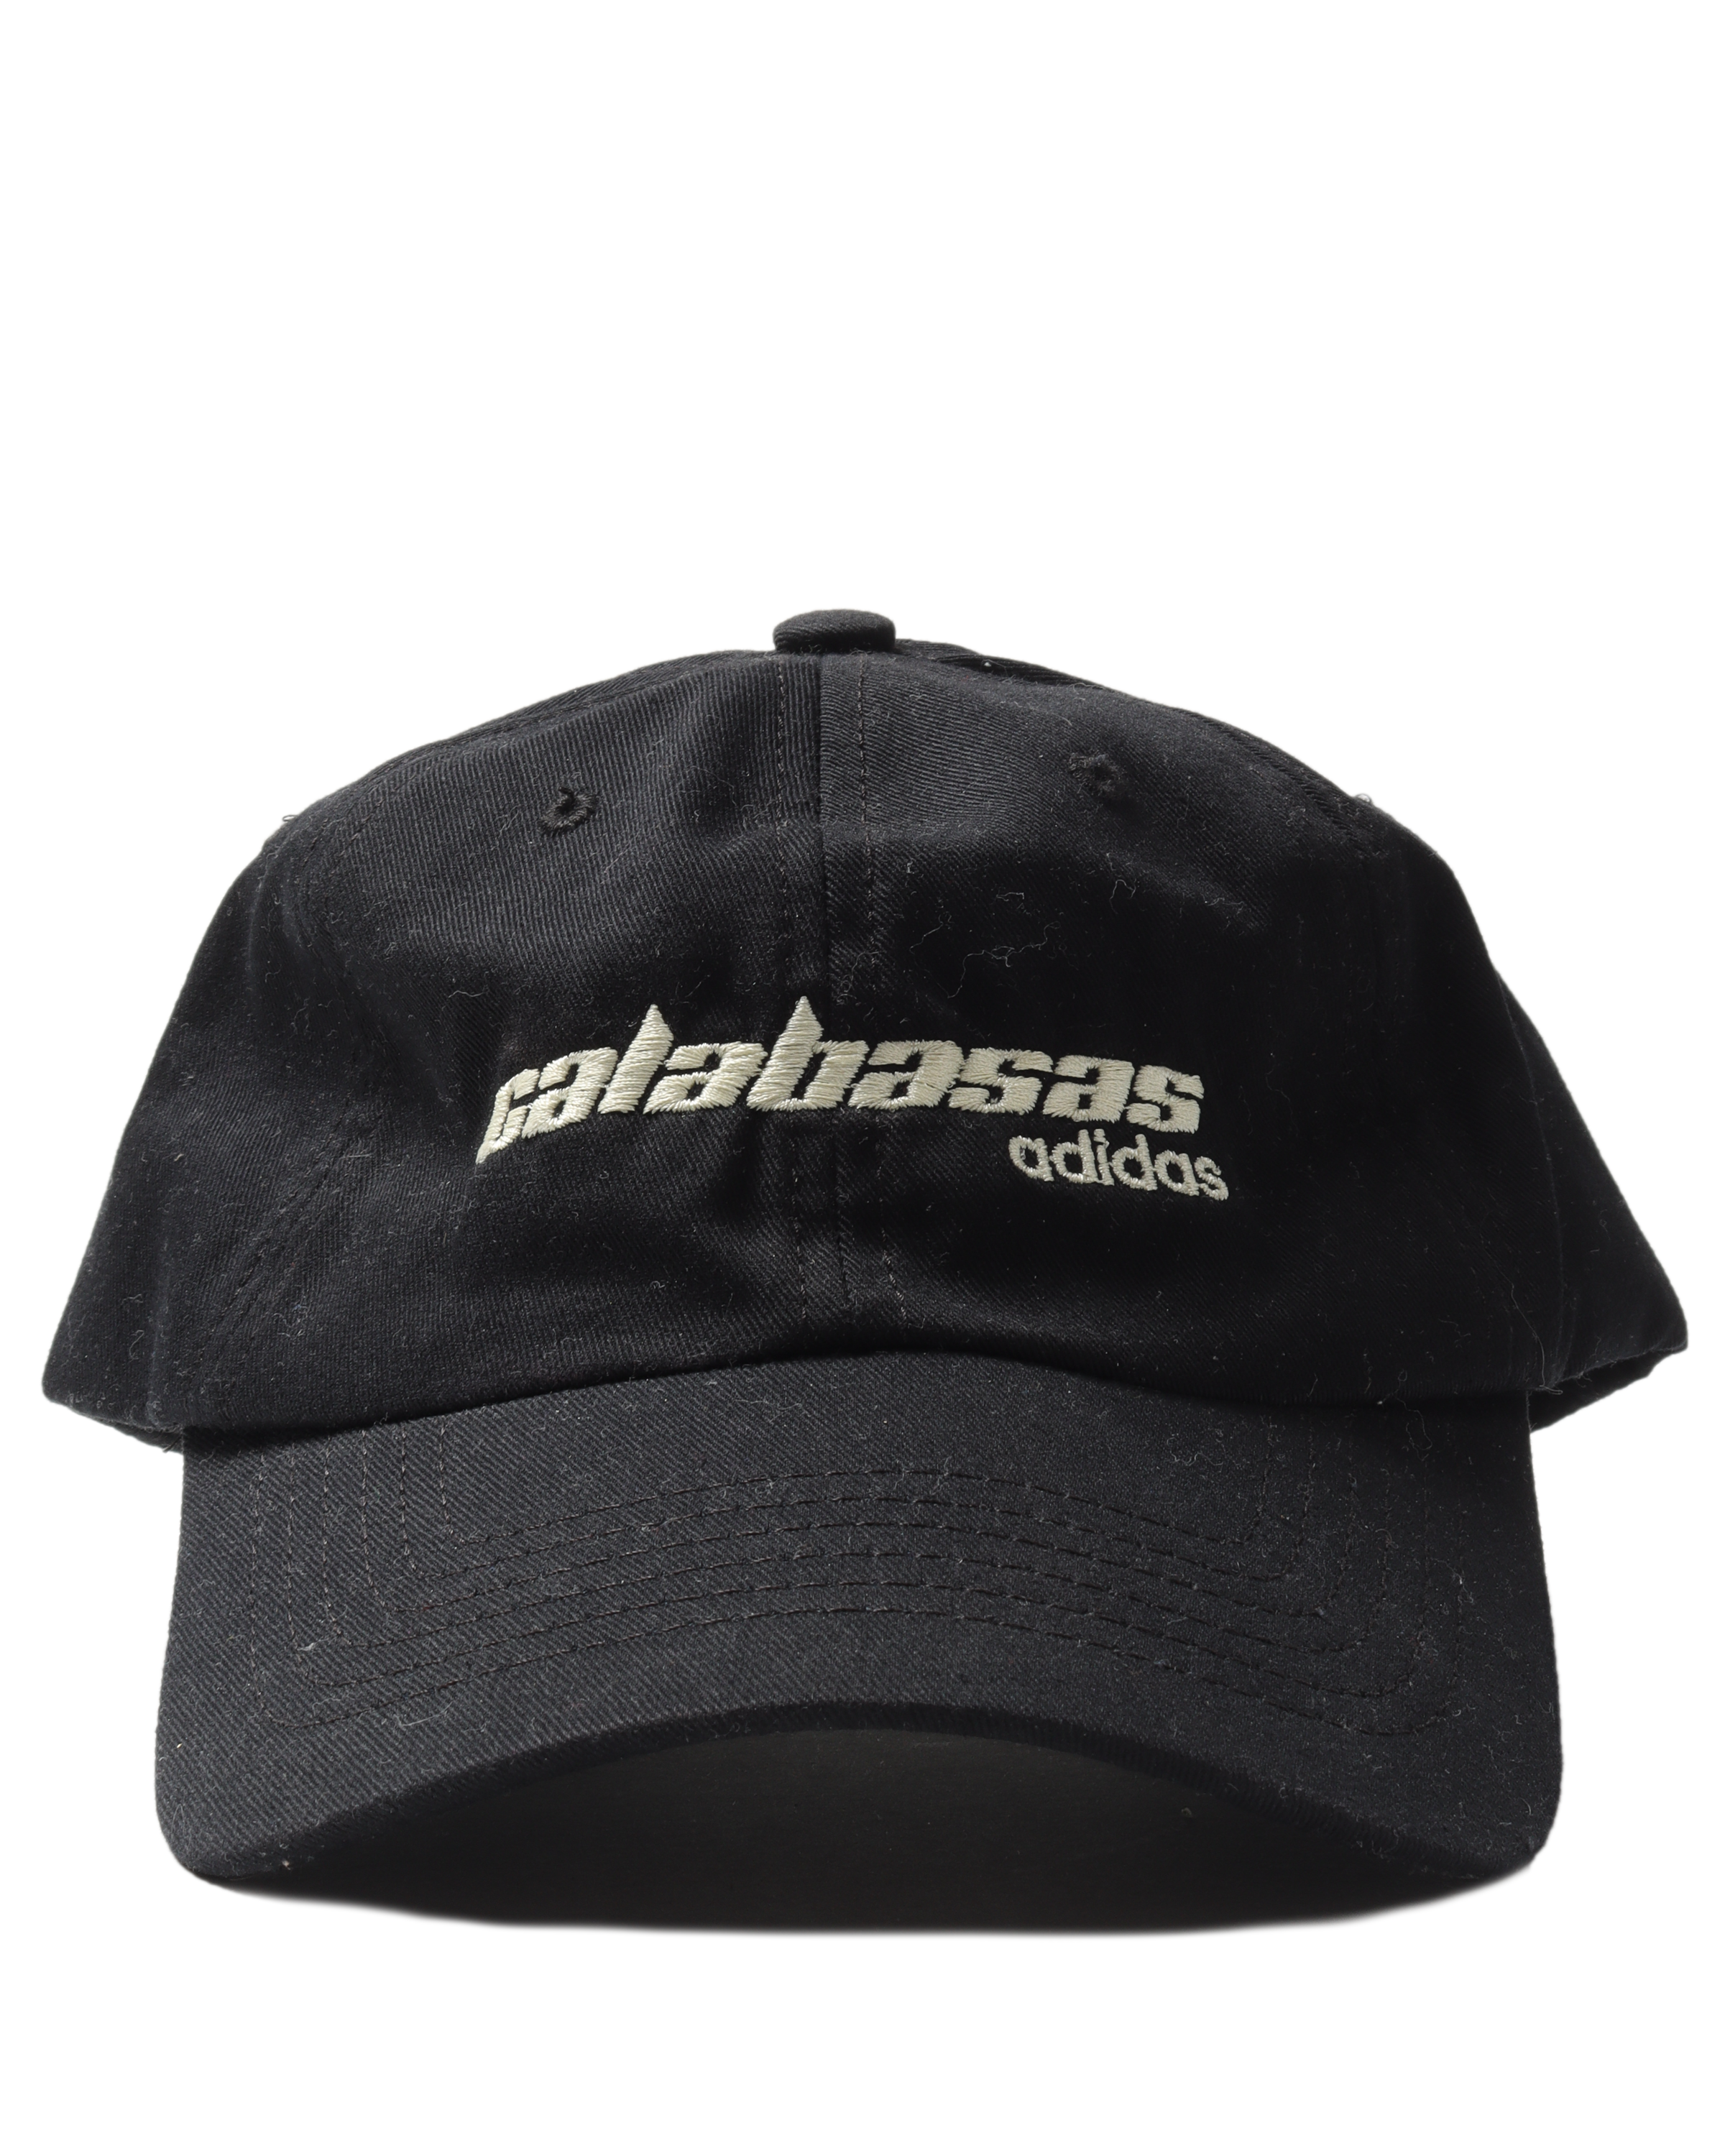 Season 5 "Calabasas" Hat